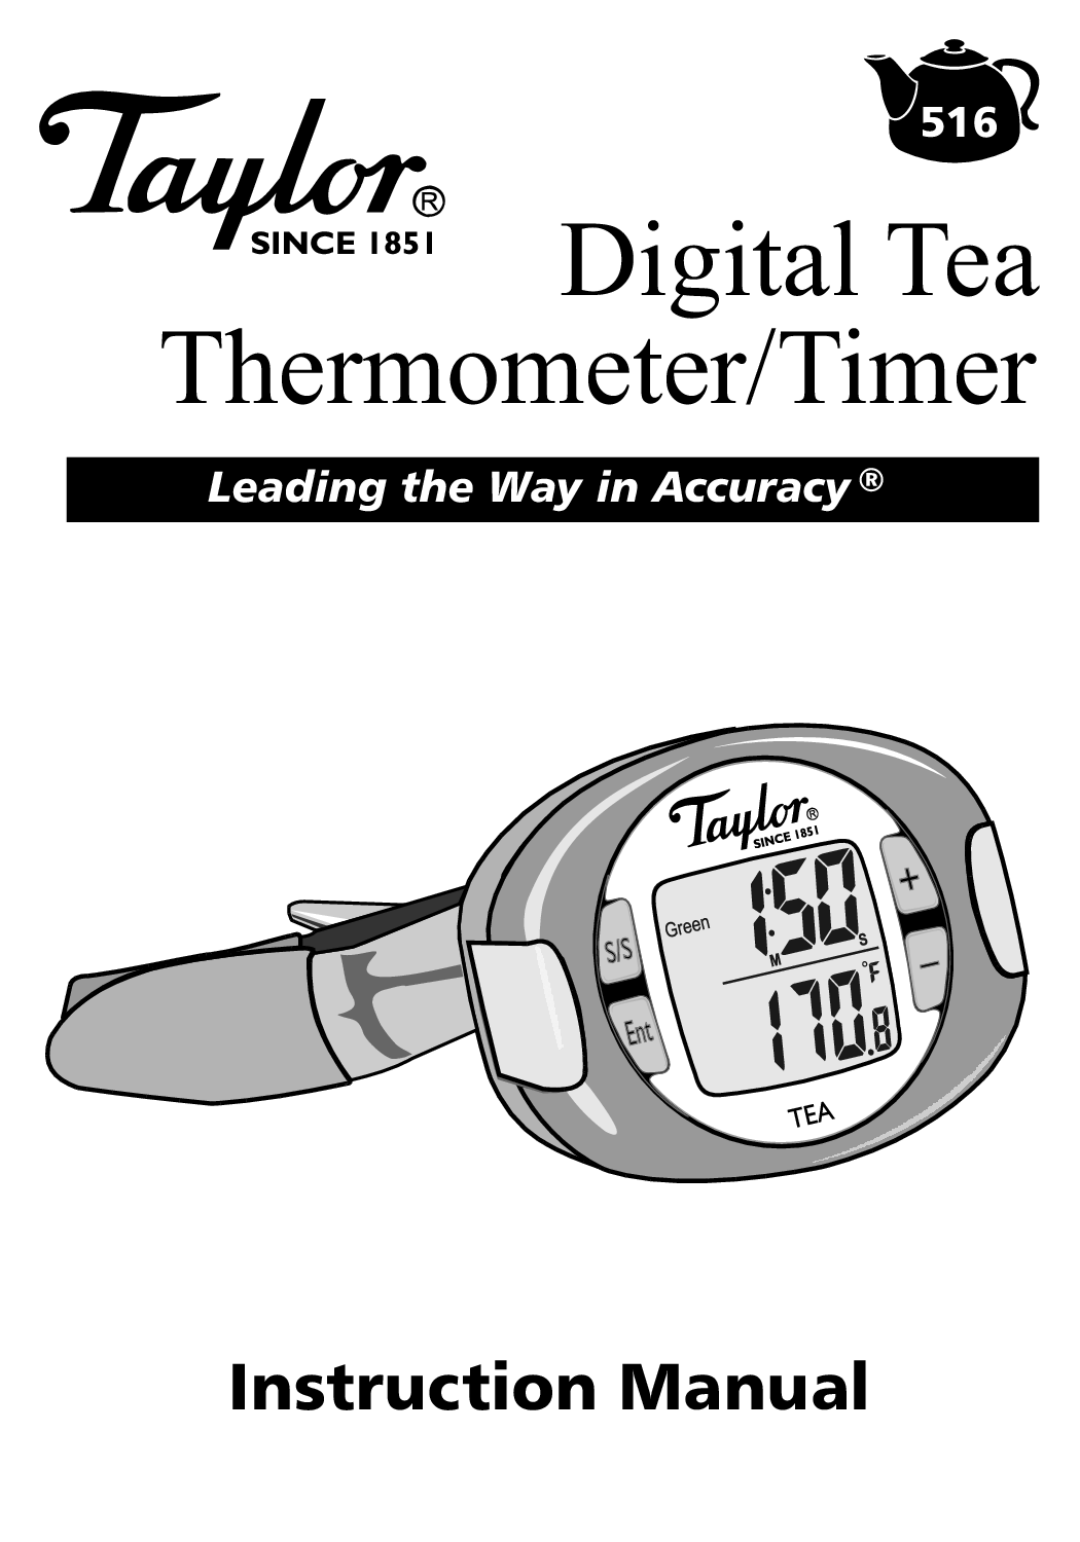 Taylor 516 instruction manual Digital Tea Thermometer/Timer, Instruction Manual, Leading the Way in Accuracy 